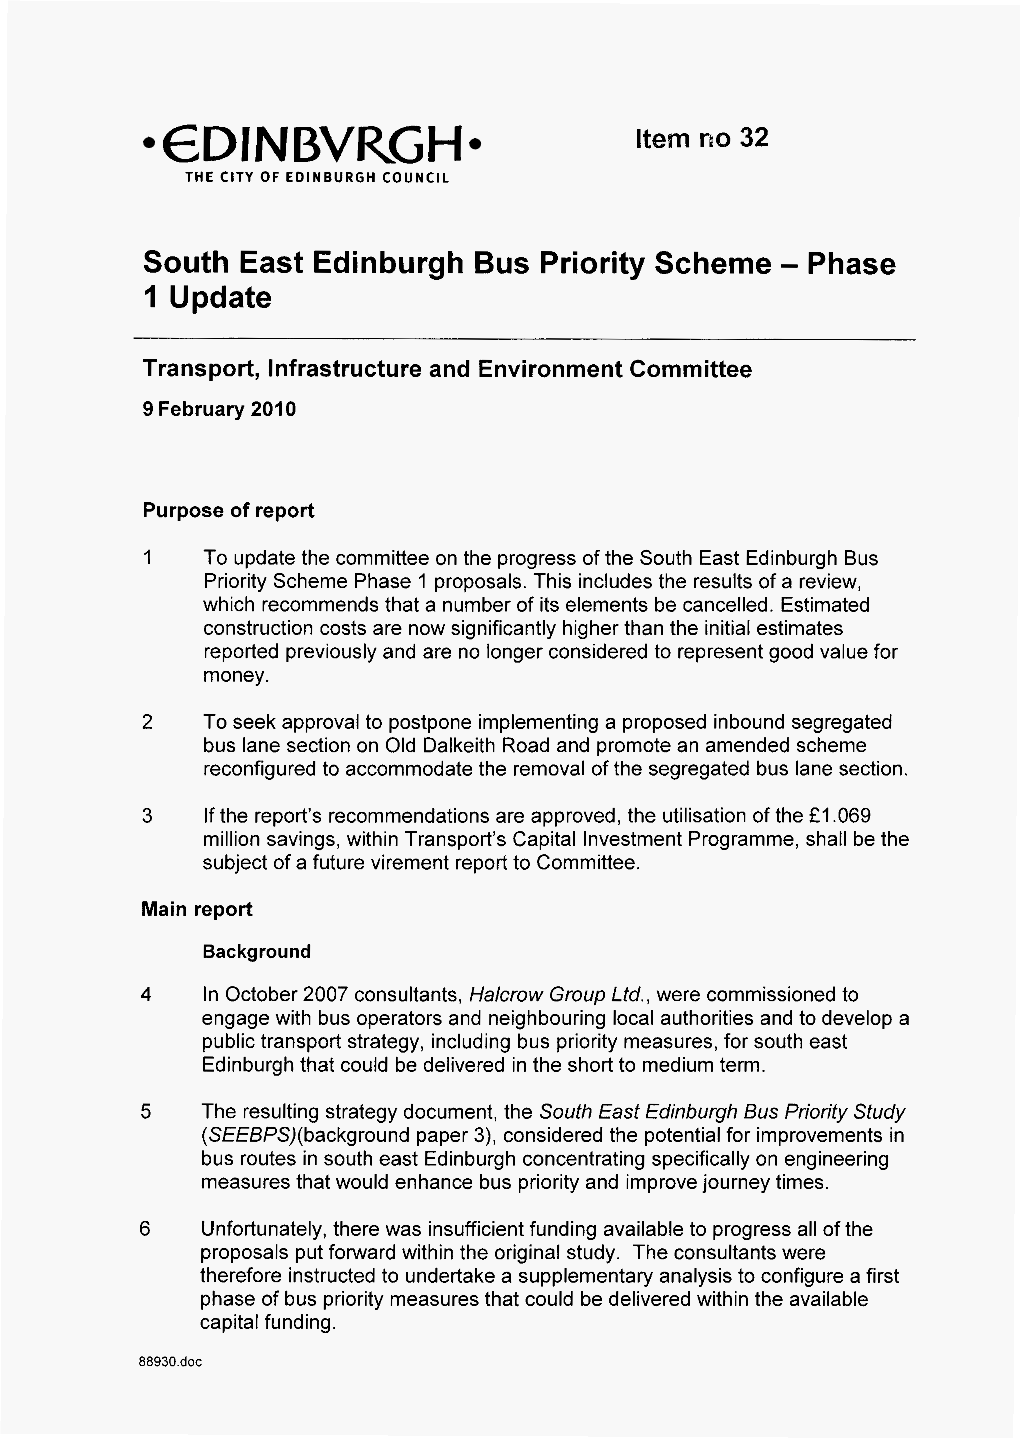 South East Edinburgh Bus Priority Scheme - Phase I Update